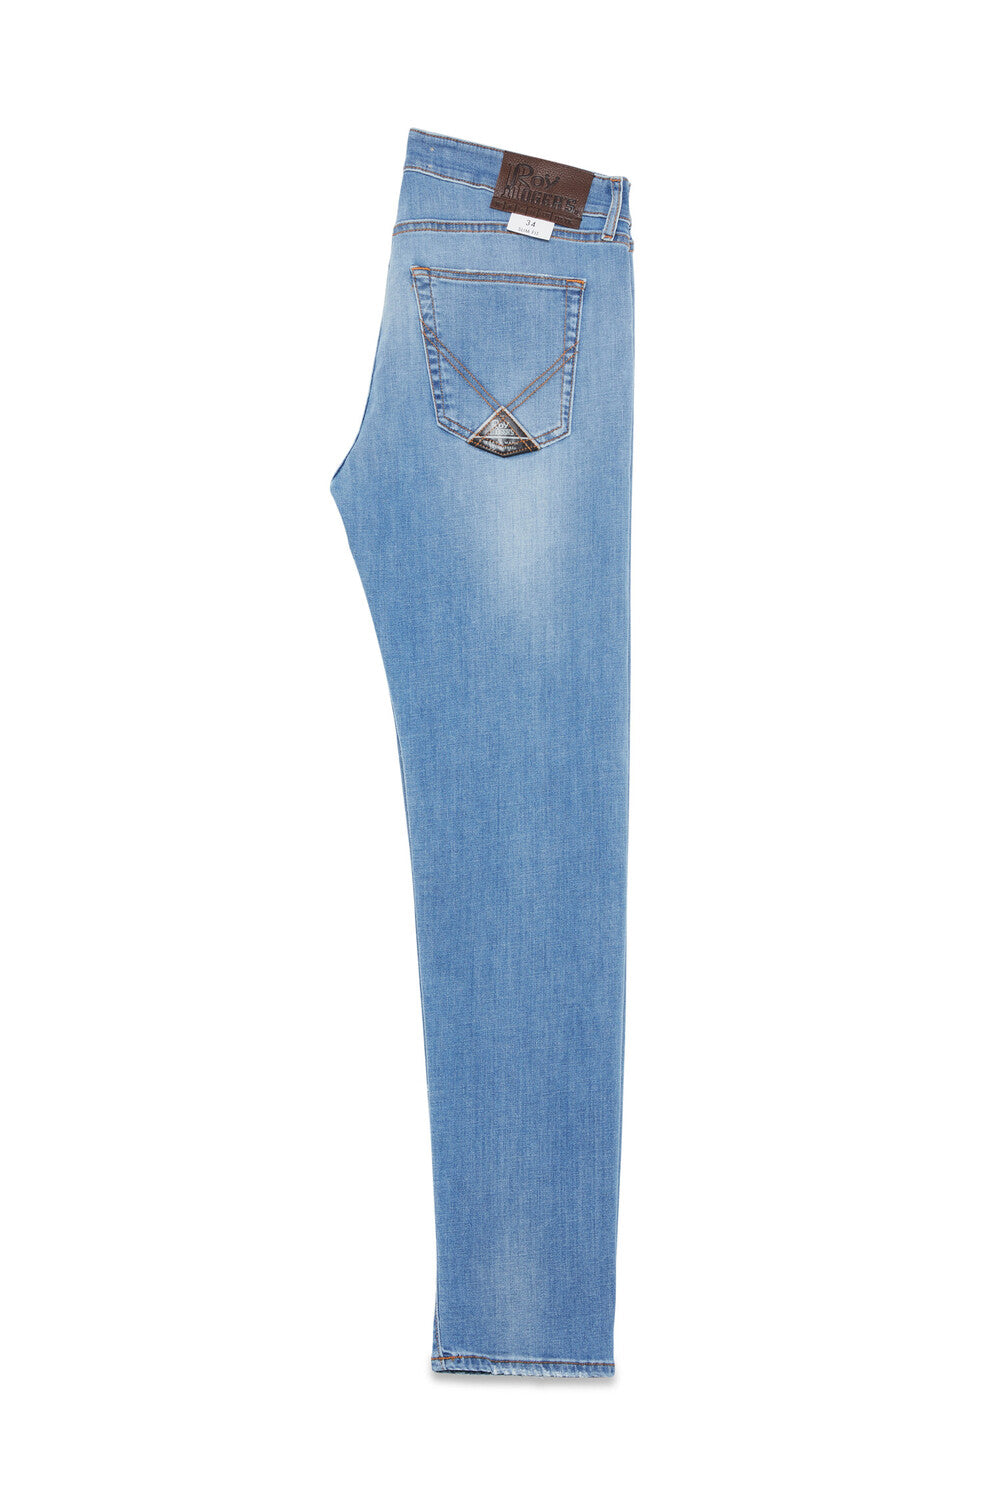 Roy Rogers jeans uomo 517 denim light elast